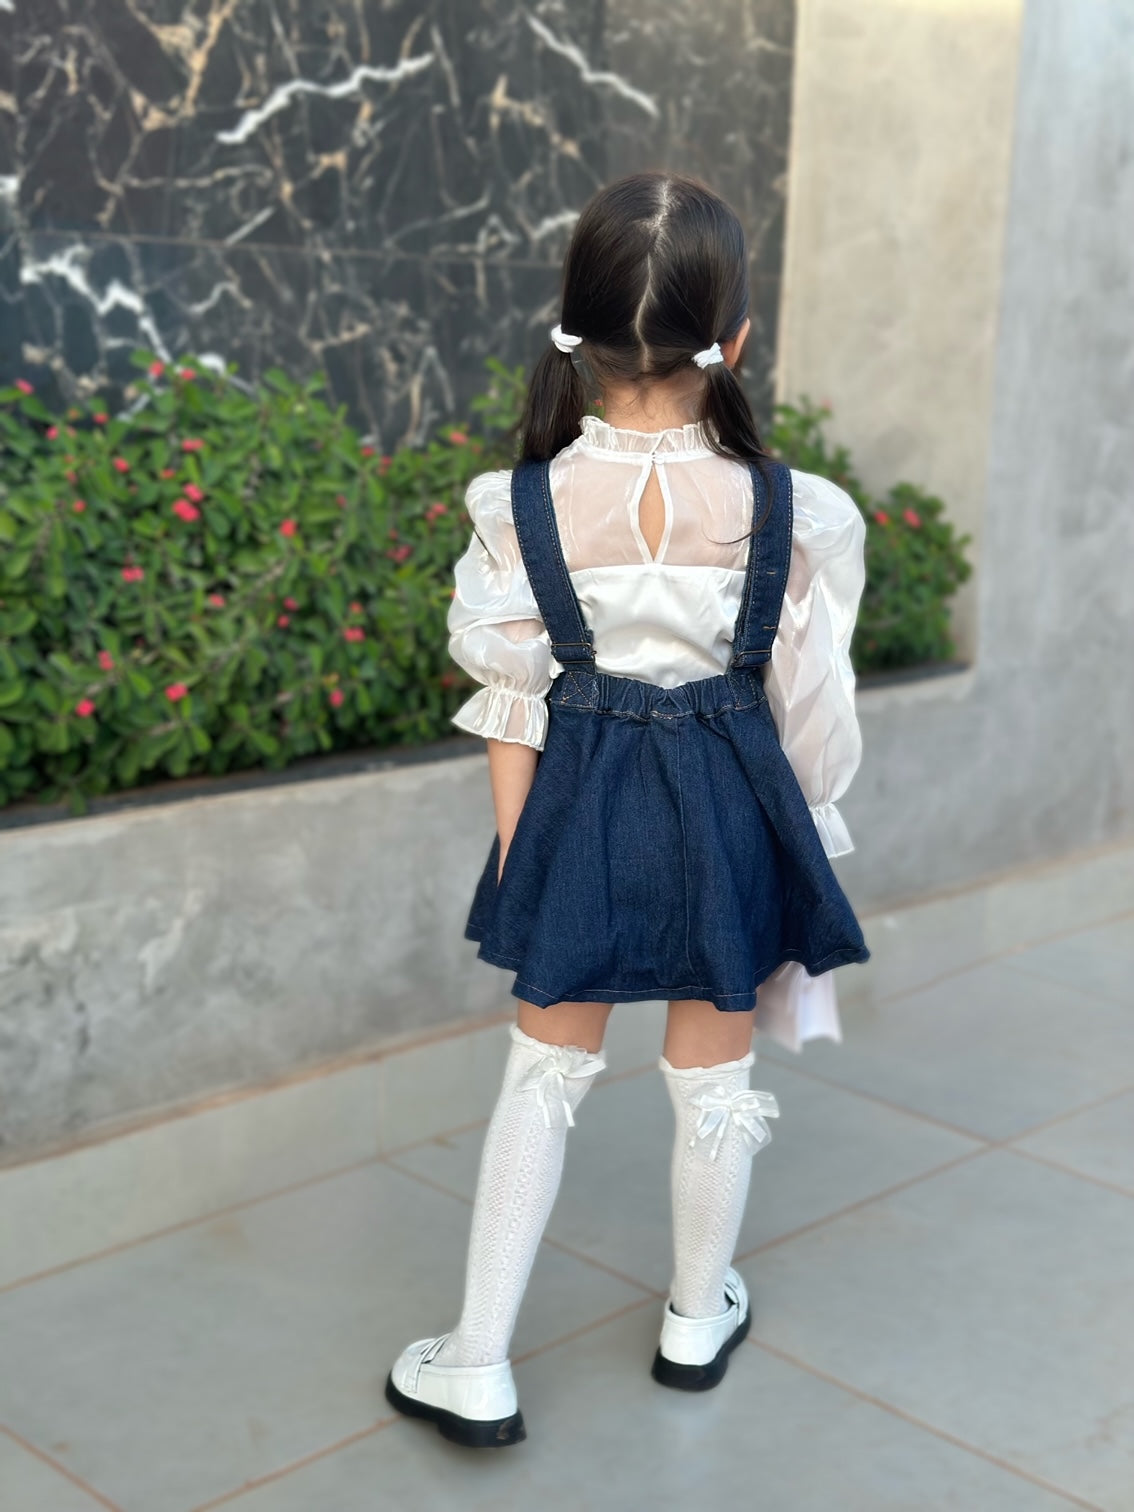 Jeans Denim Space Dress – Adjustable Kidscool Overalls Girls Jumpers